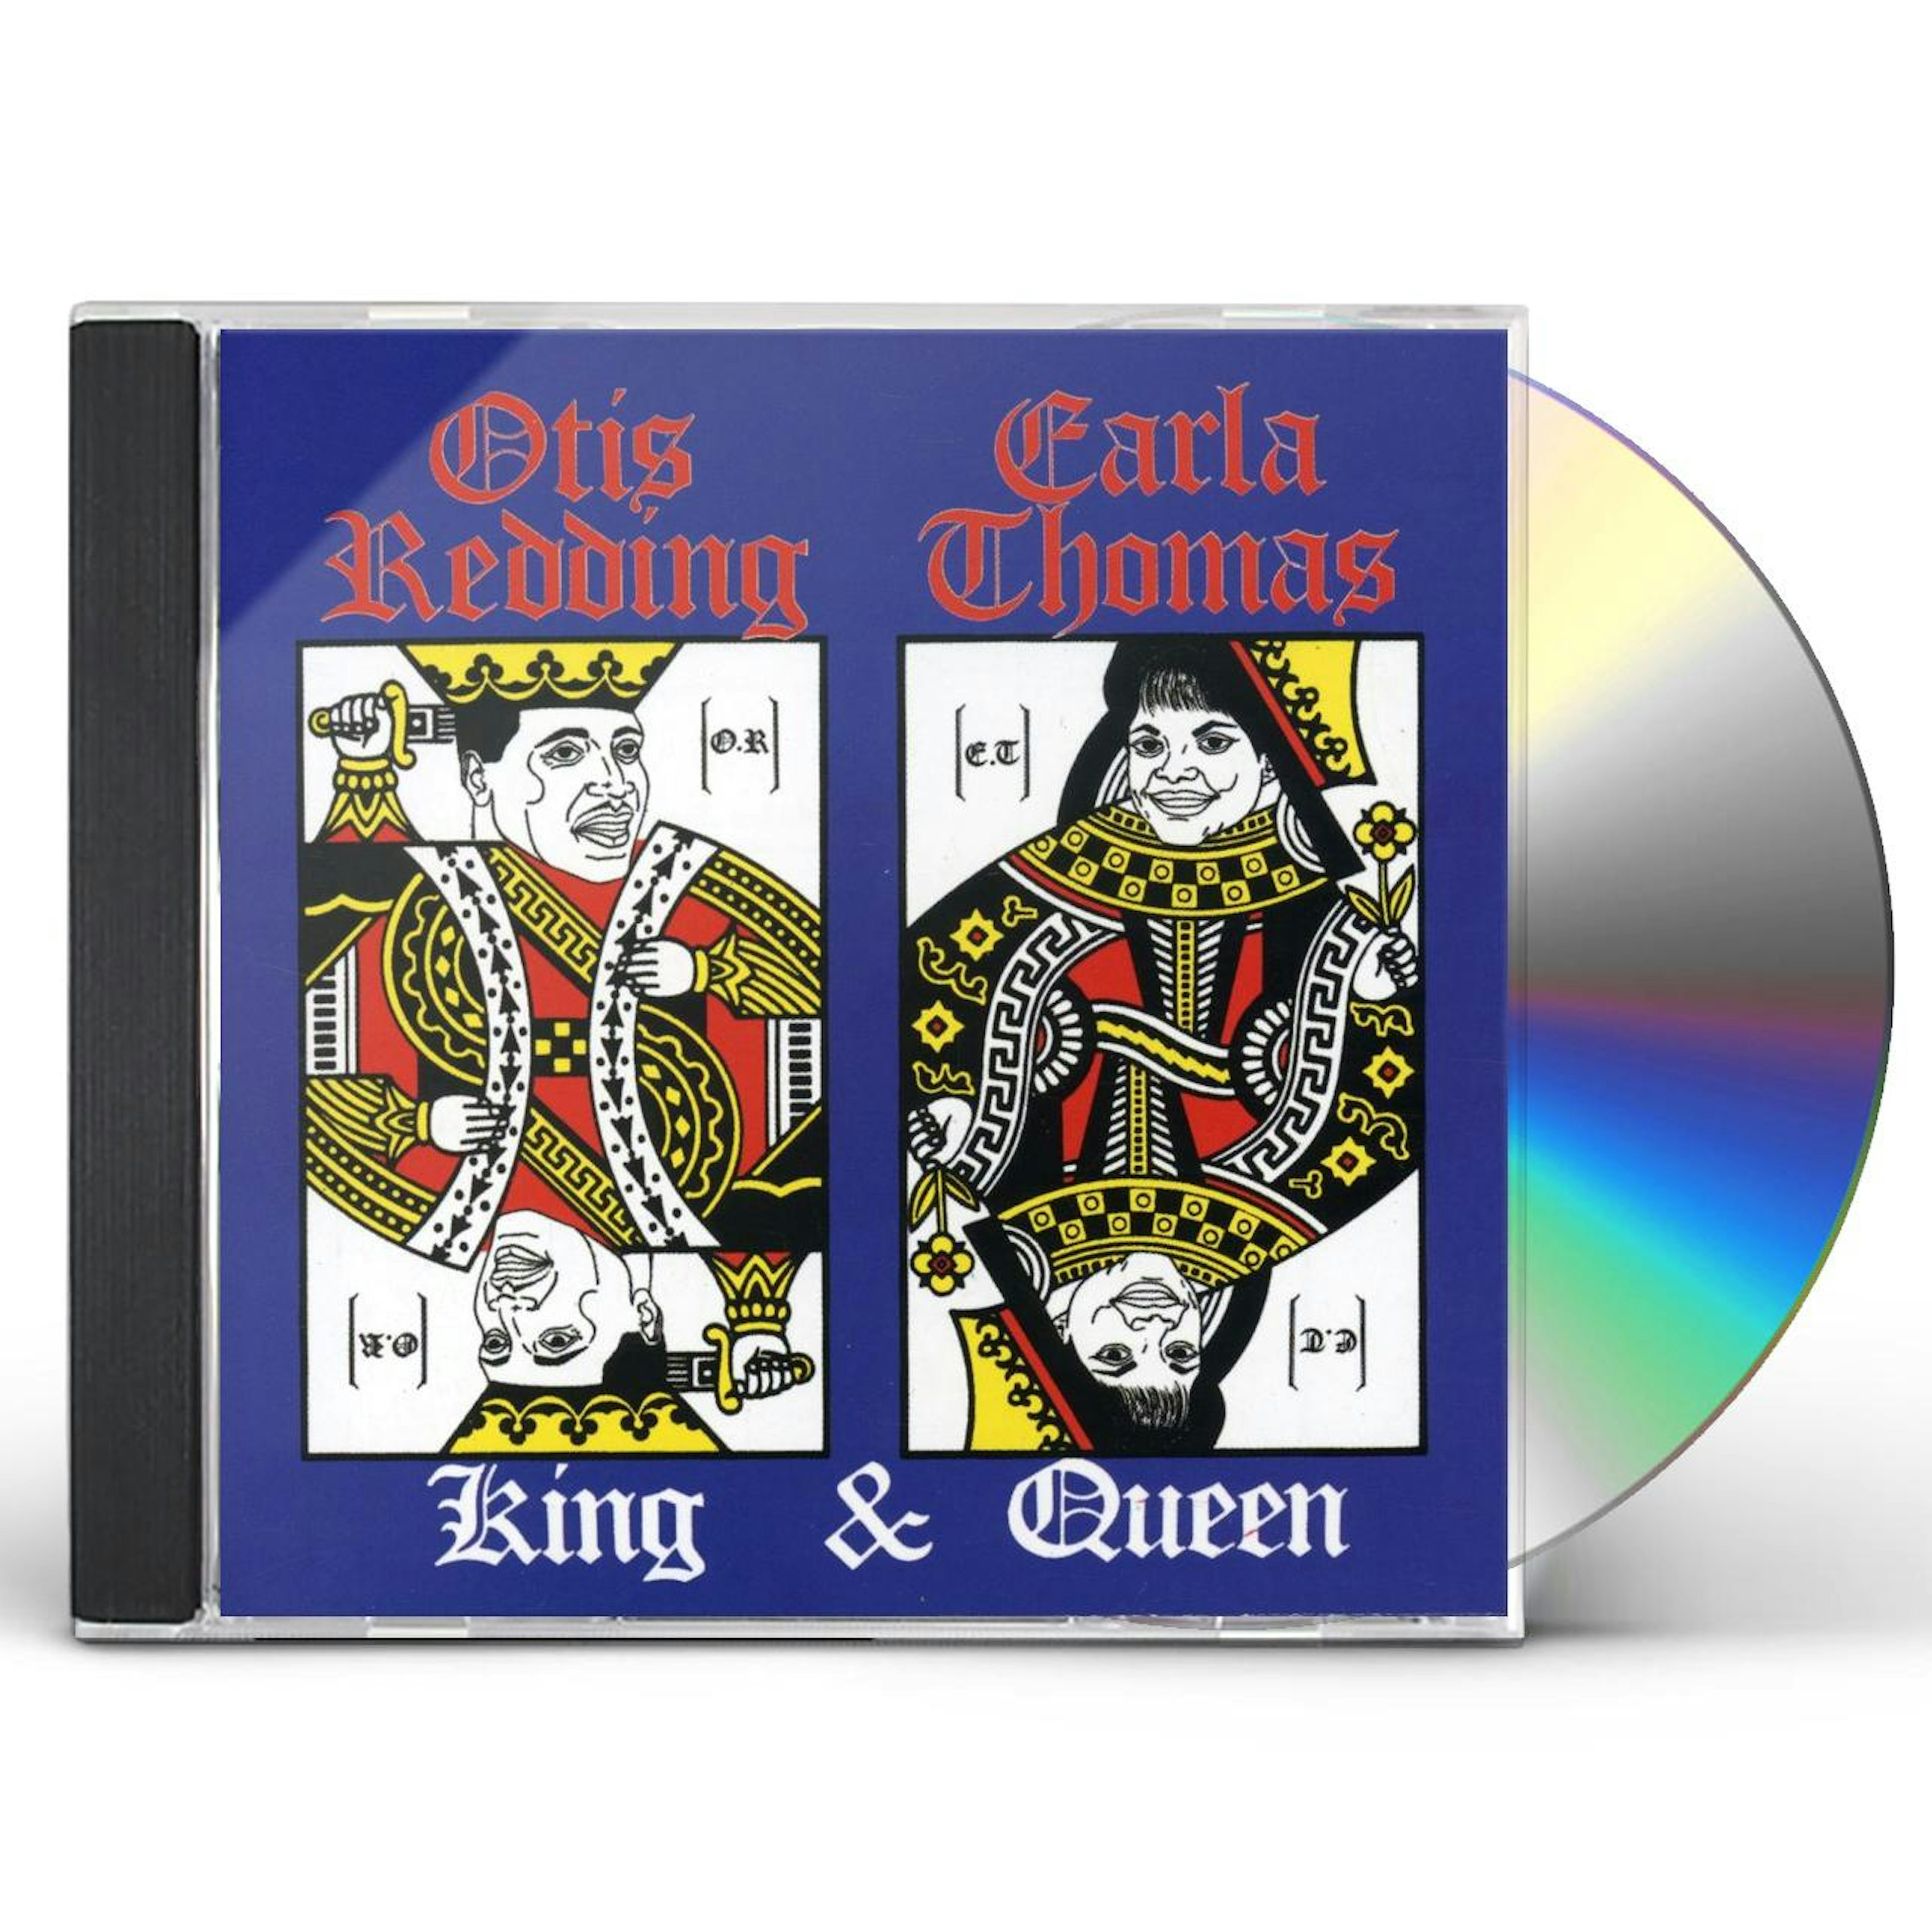 Carla Thomas Otis Redding KING & QUEEN CD